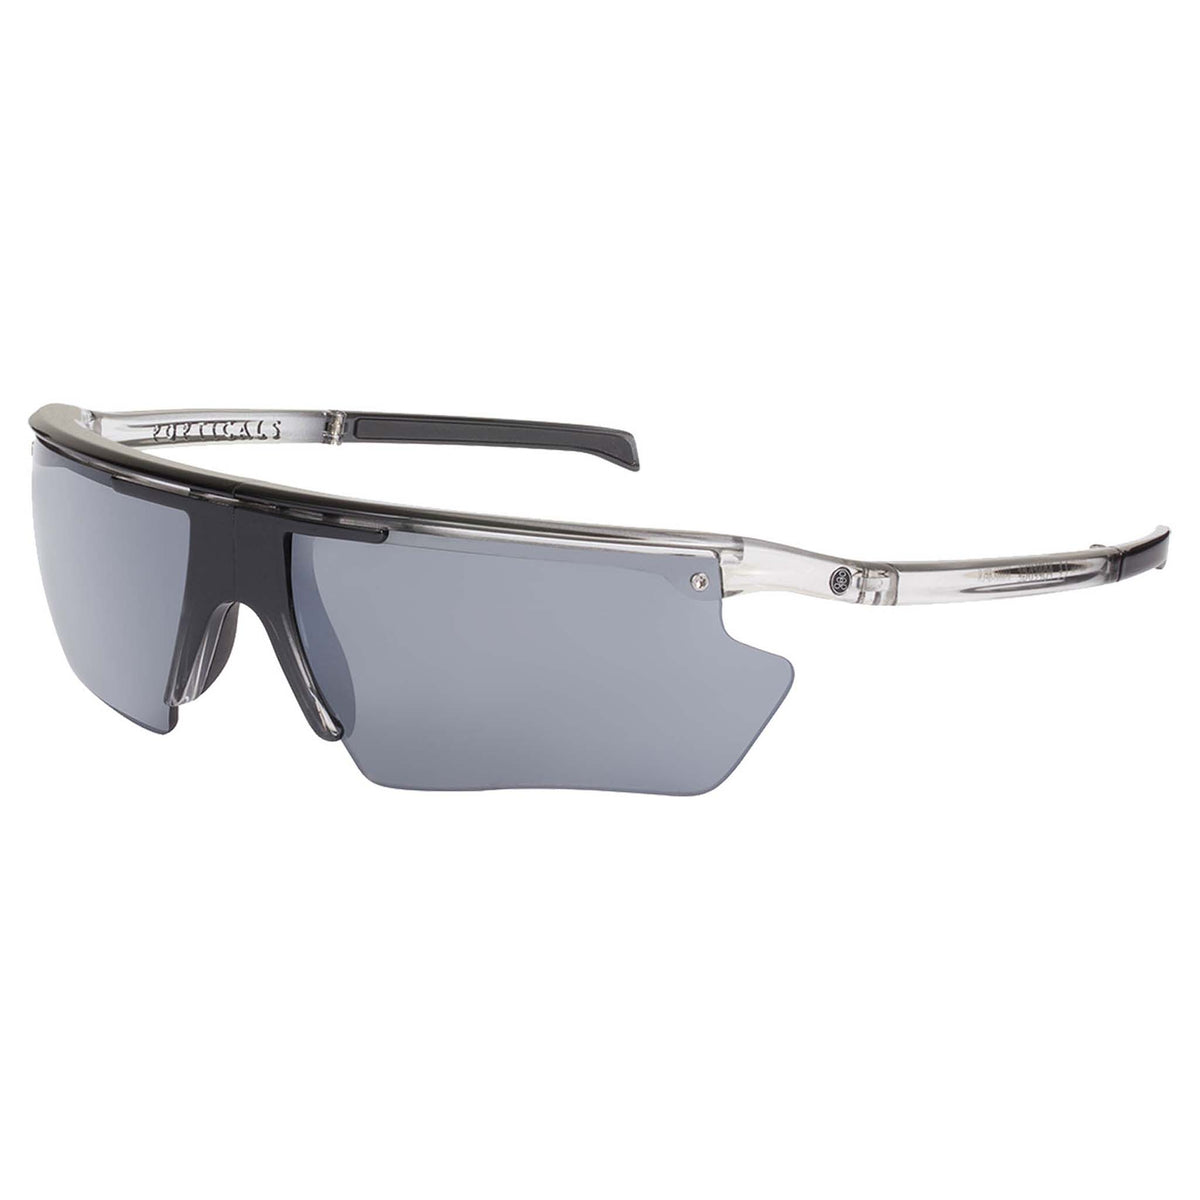 Popticals, Premium Compact Sunglasses, PopEdge, 010091-SFLN, Polarized Sunglasses, Gloss Smoke Frame, Gray Lenses with Silver Mirror Finish, Glam View